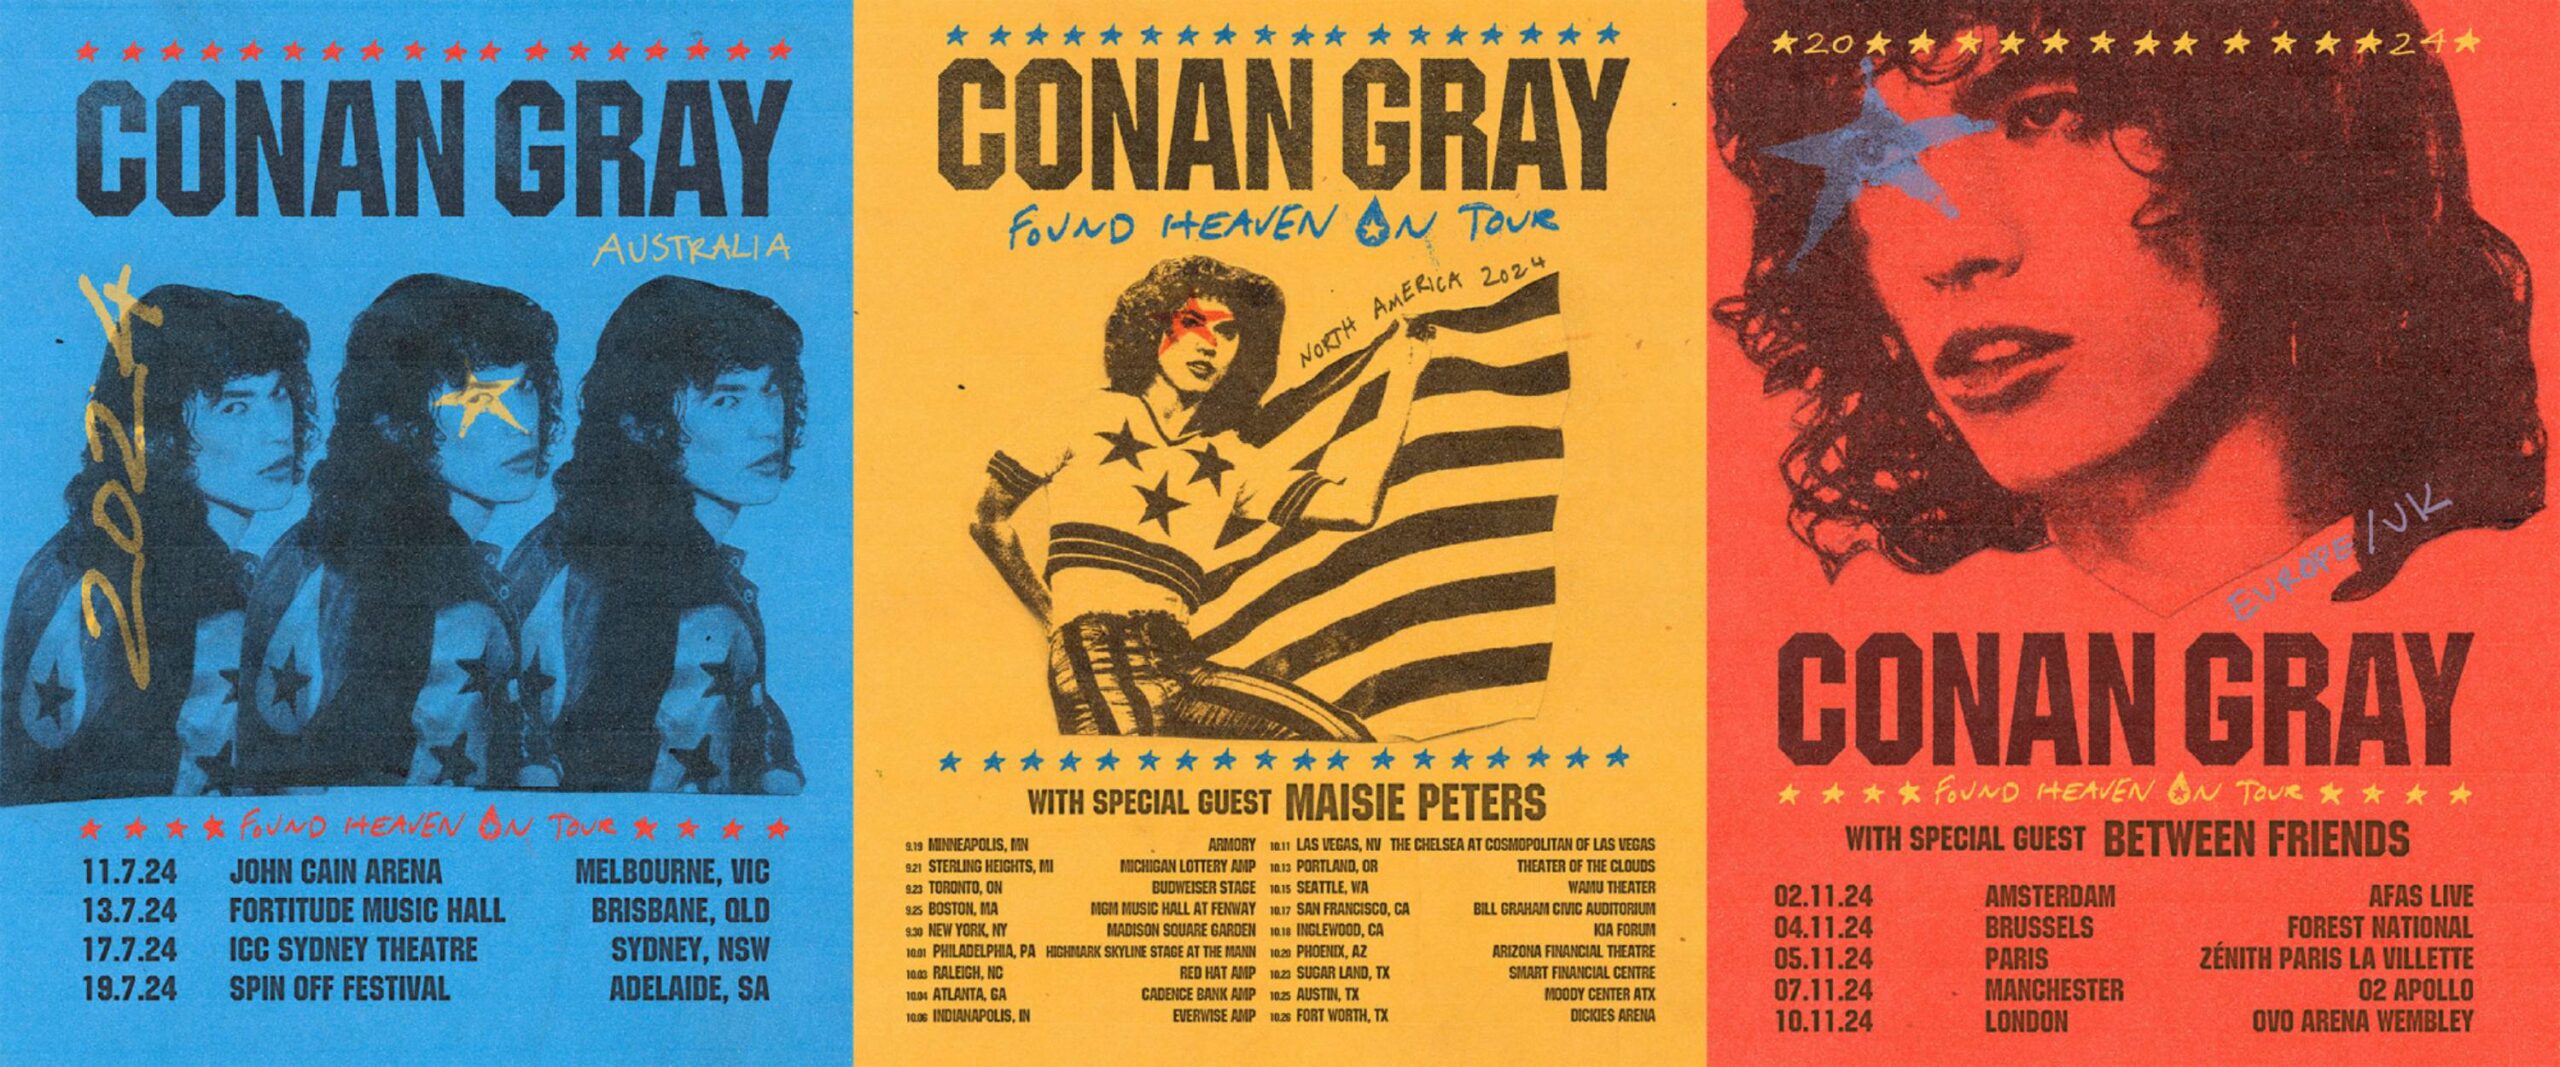 Conan Gray 'Found Heaven' On Tour Poster. Credit: PRESS